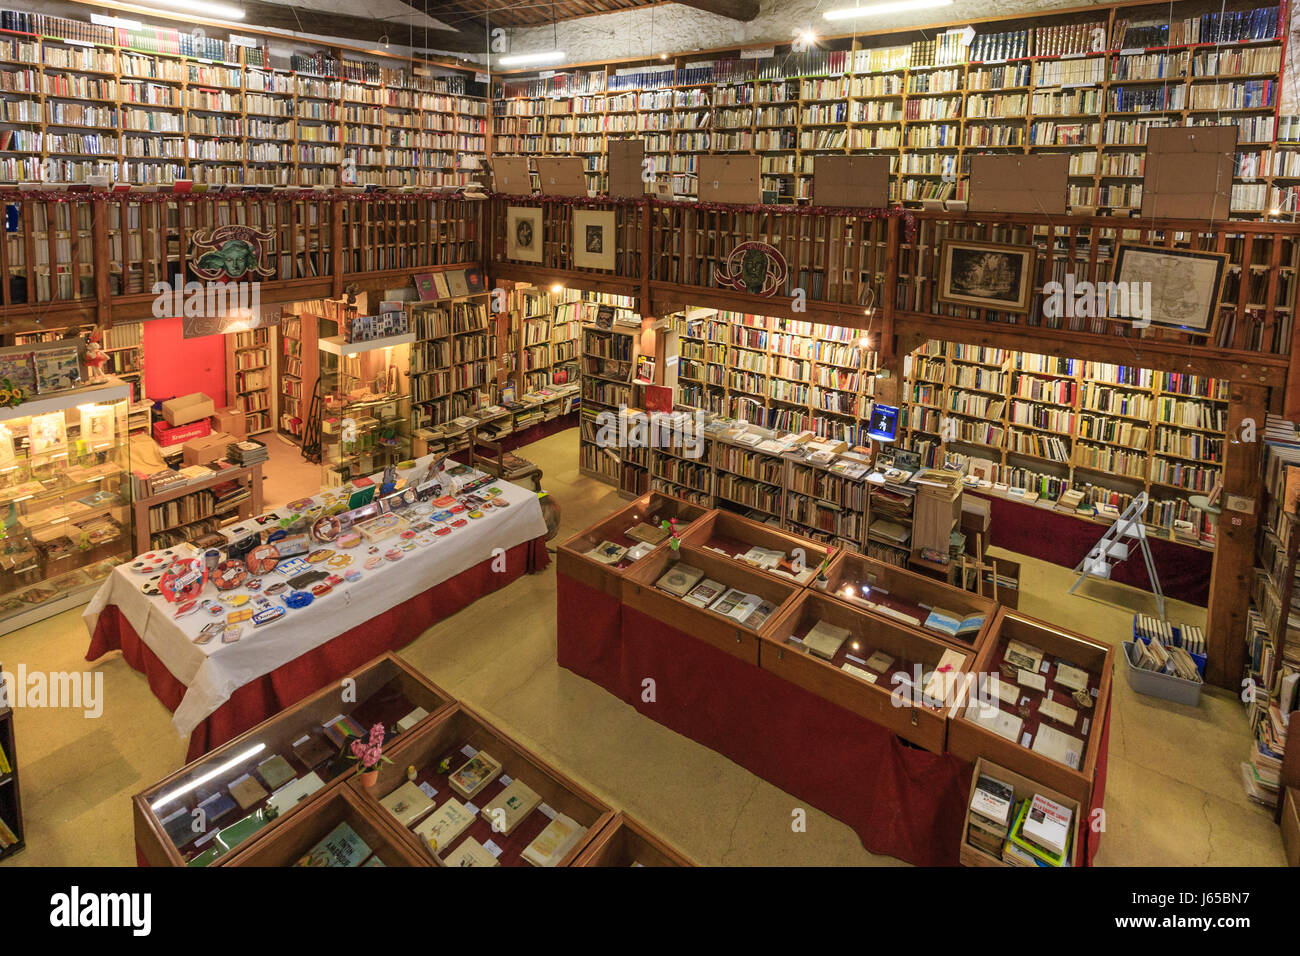 Frankreich, Aude, Le Somail, Hafen am Canal du Midi, Le Trouve Tout du Livre, Bibliothek alter Bücher in einem ehemaligen Weingut am Rande des Kanals Stockfoto